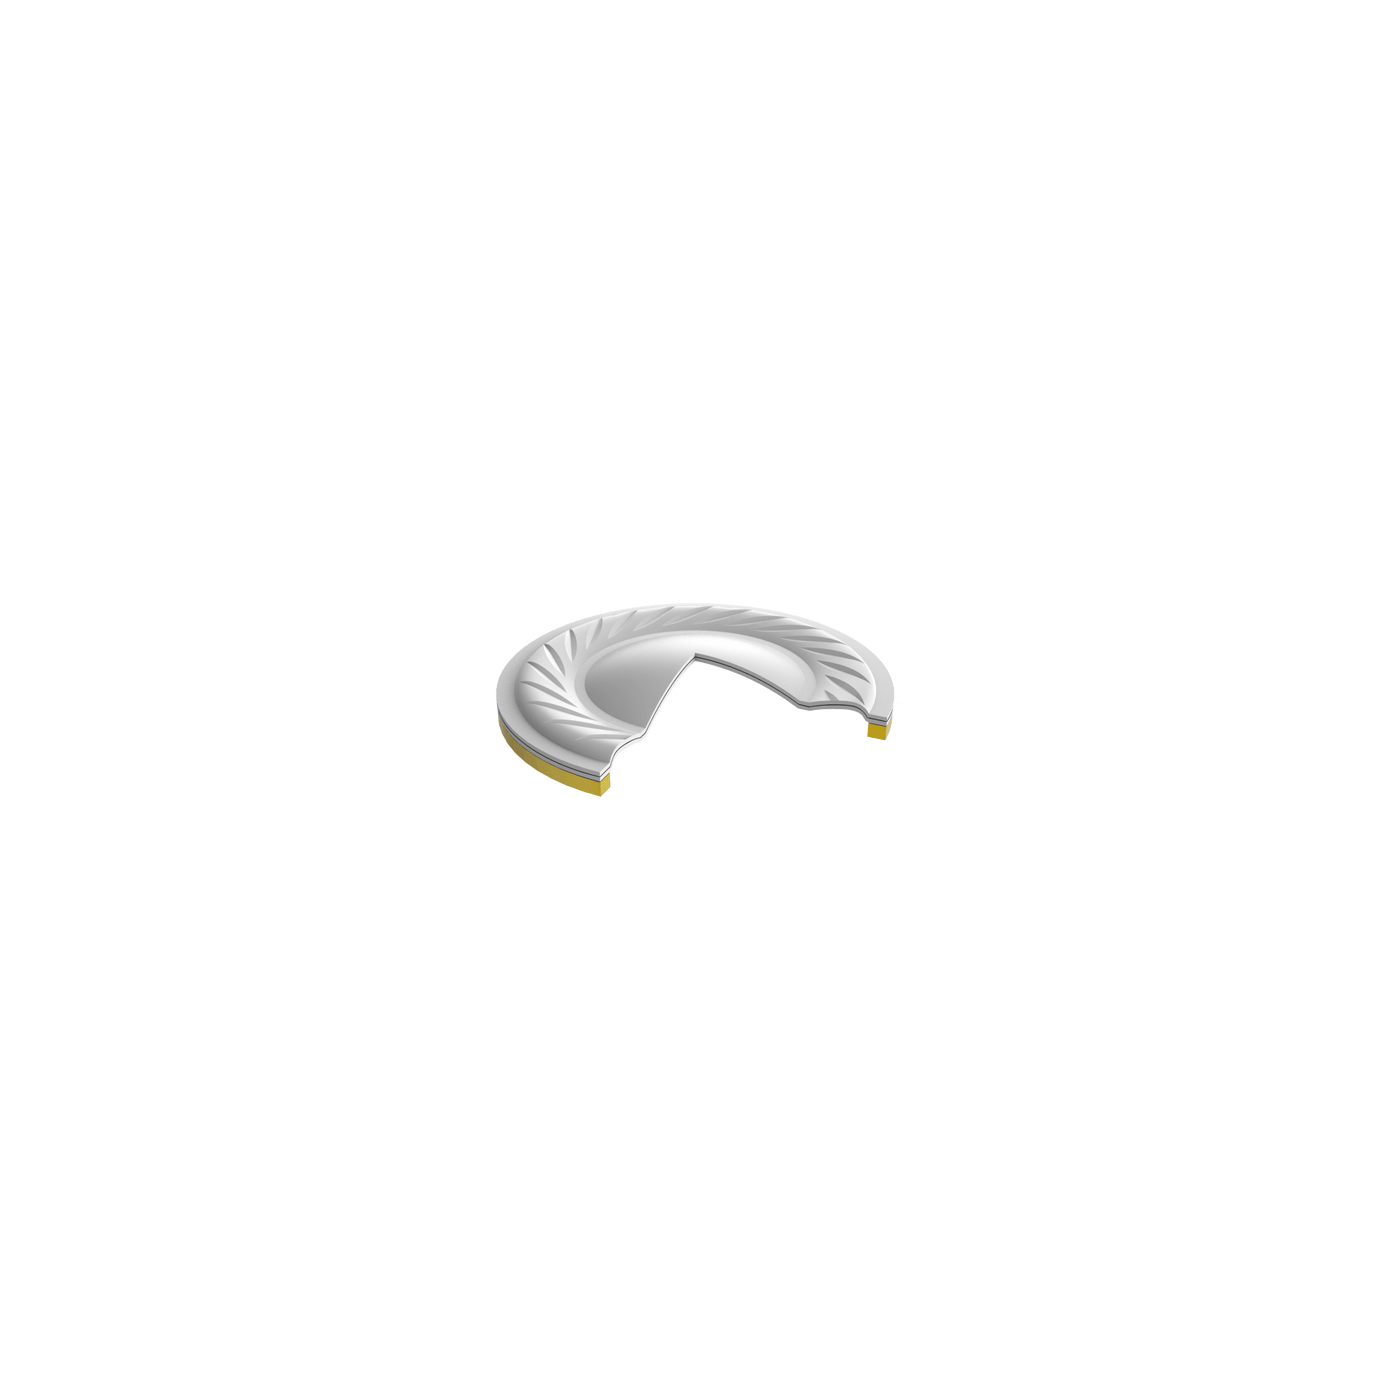 Audio-Technica ATH-CKS5TW Solid Bass Wireless In-Ear Headphones